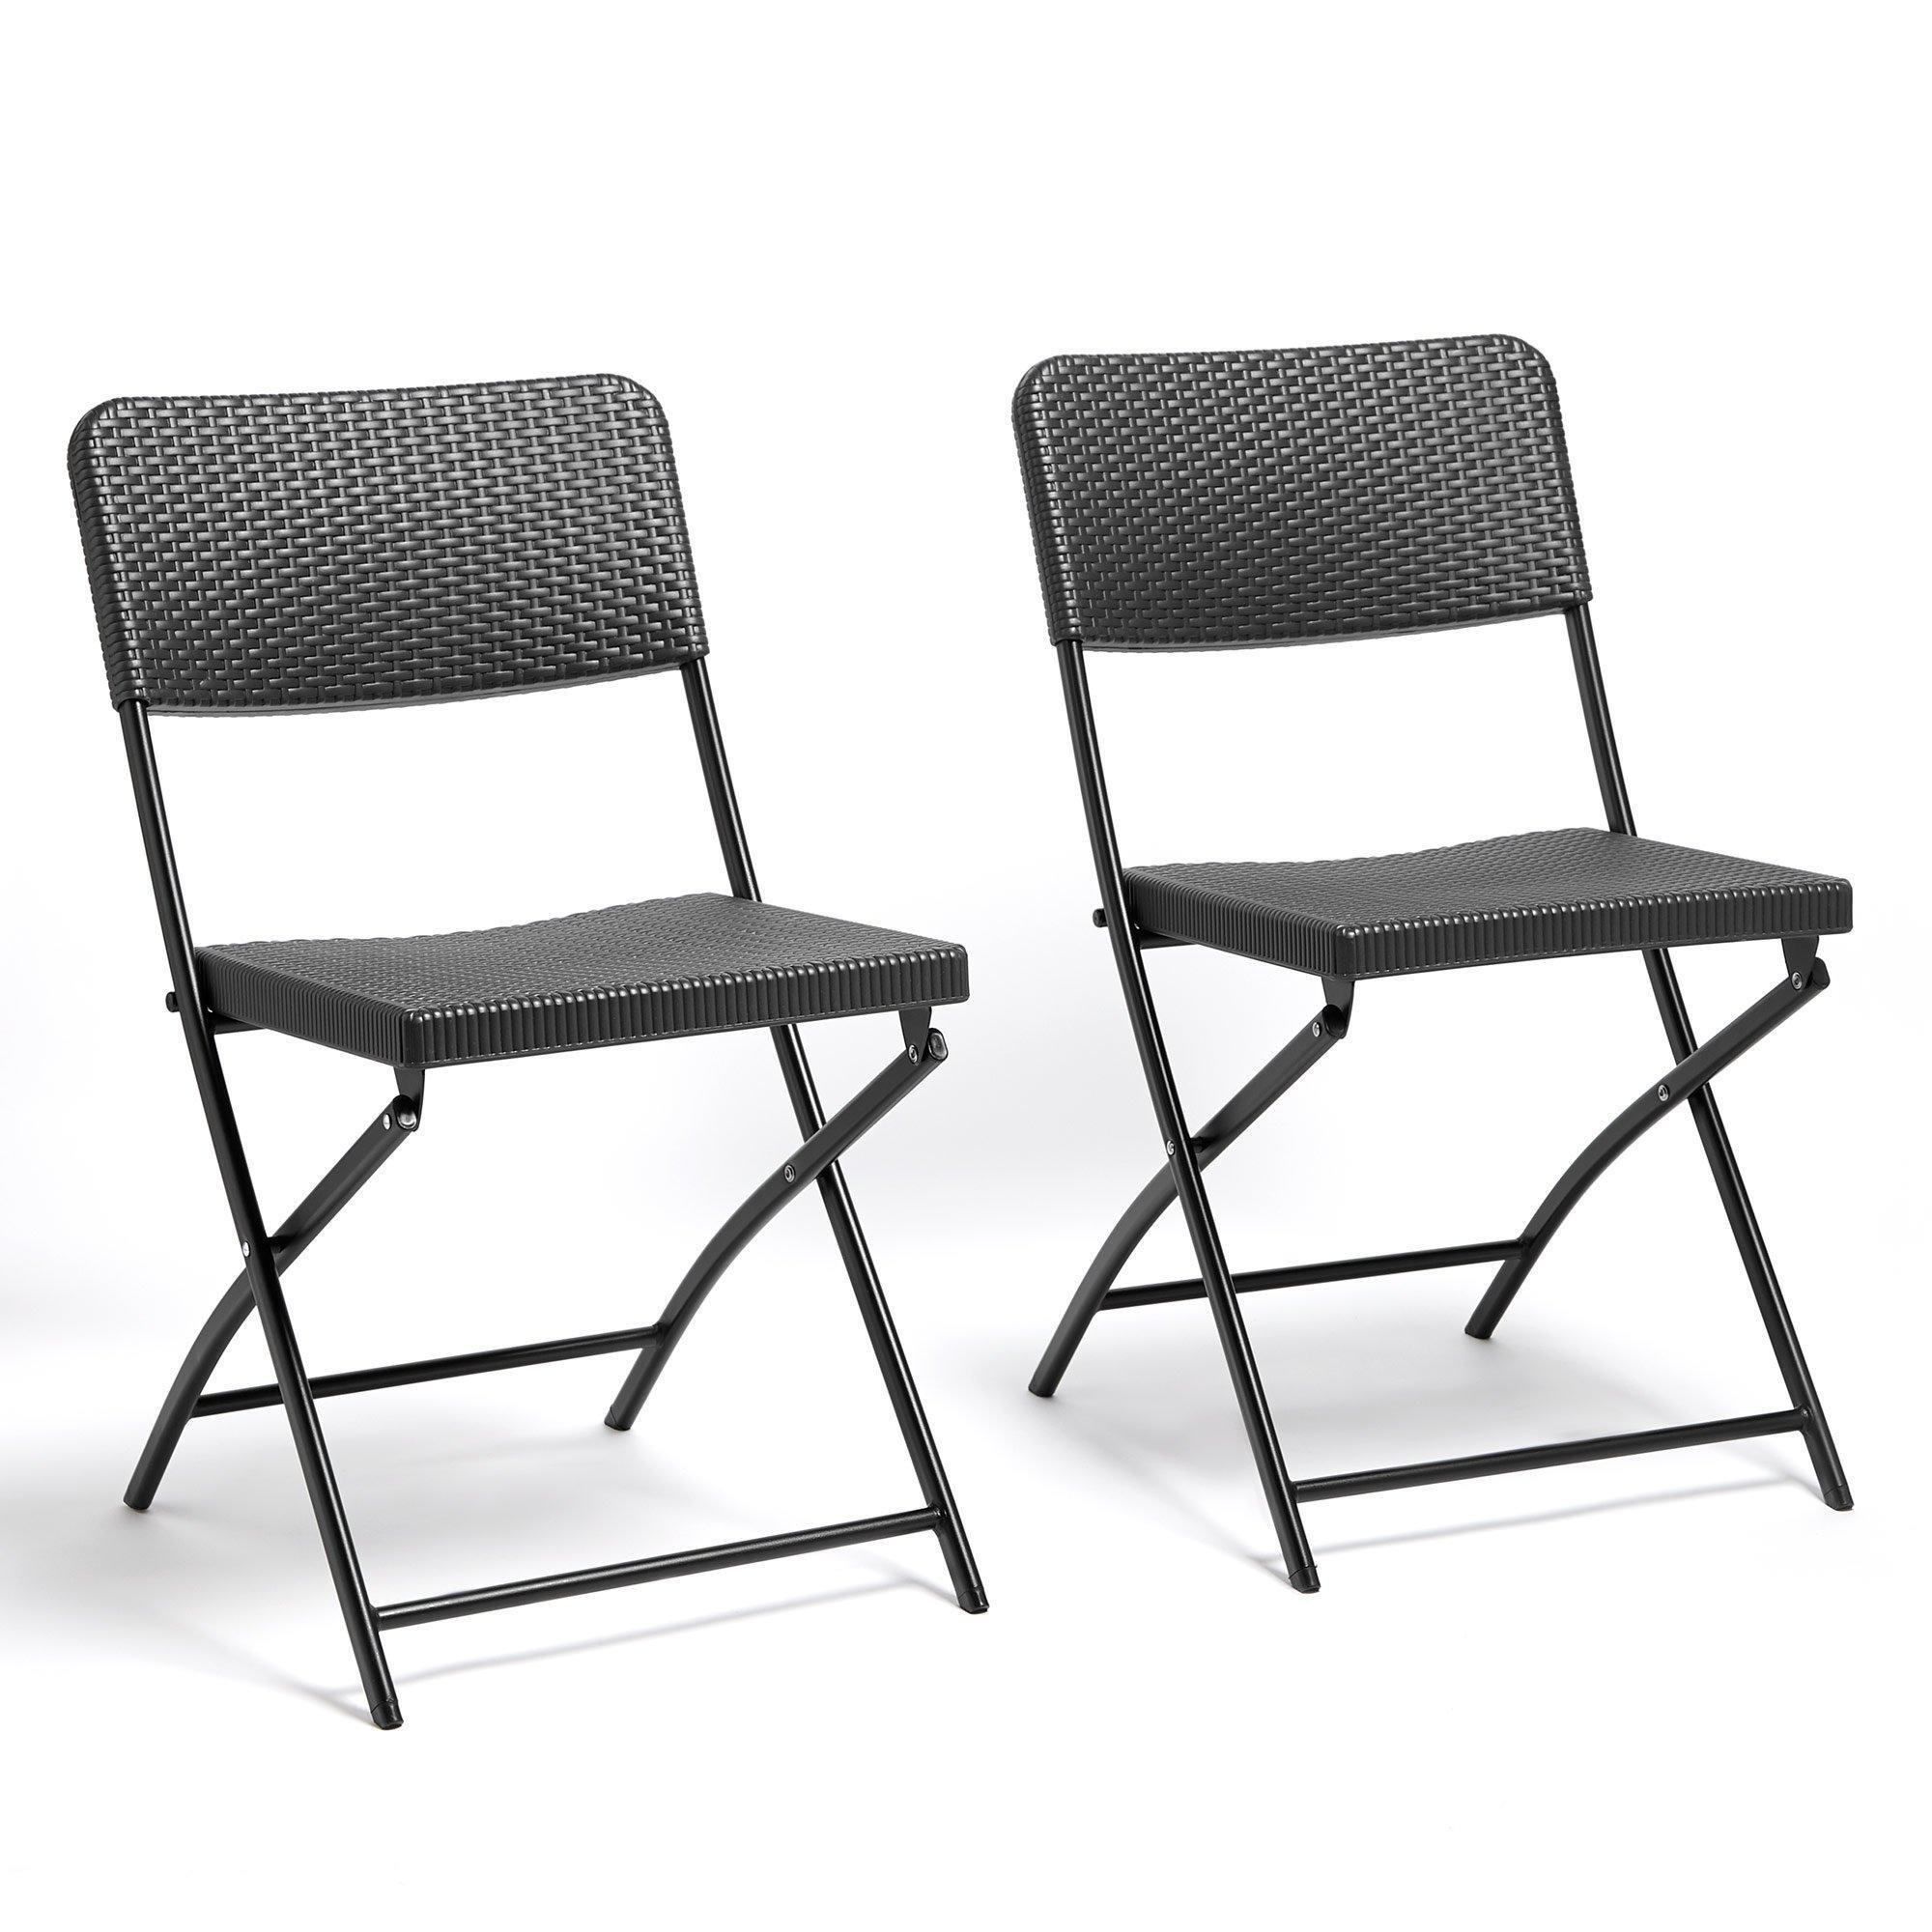 Rattan Effect Set of 2 Folding Garden Chairs - image 1